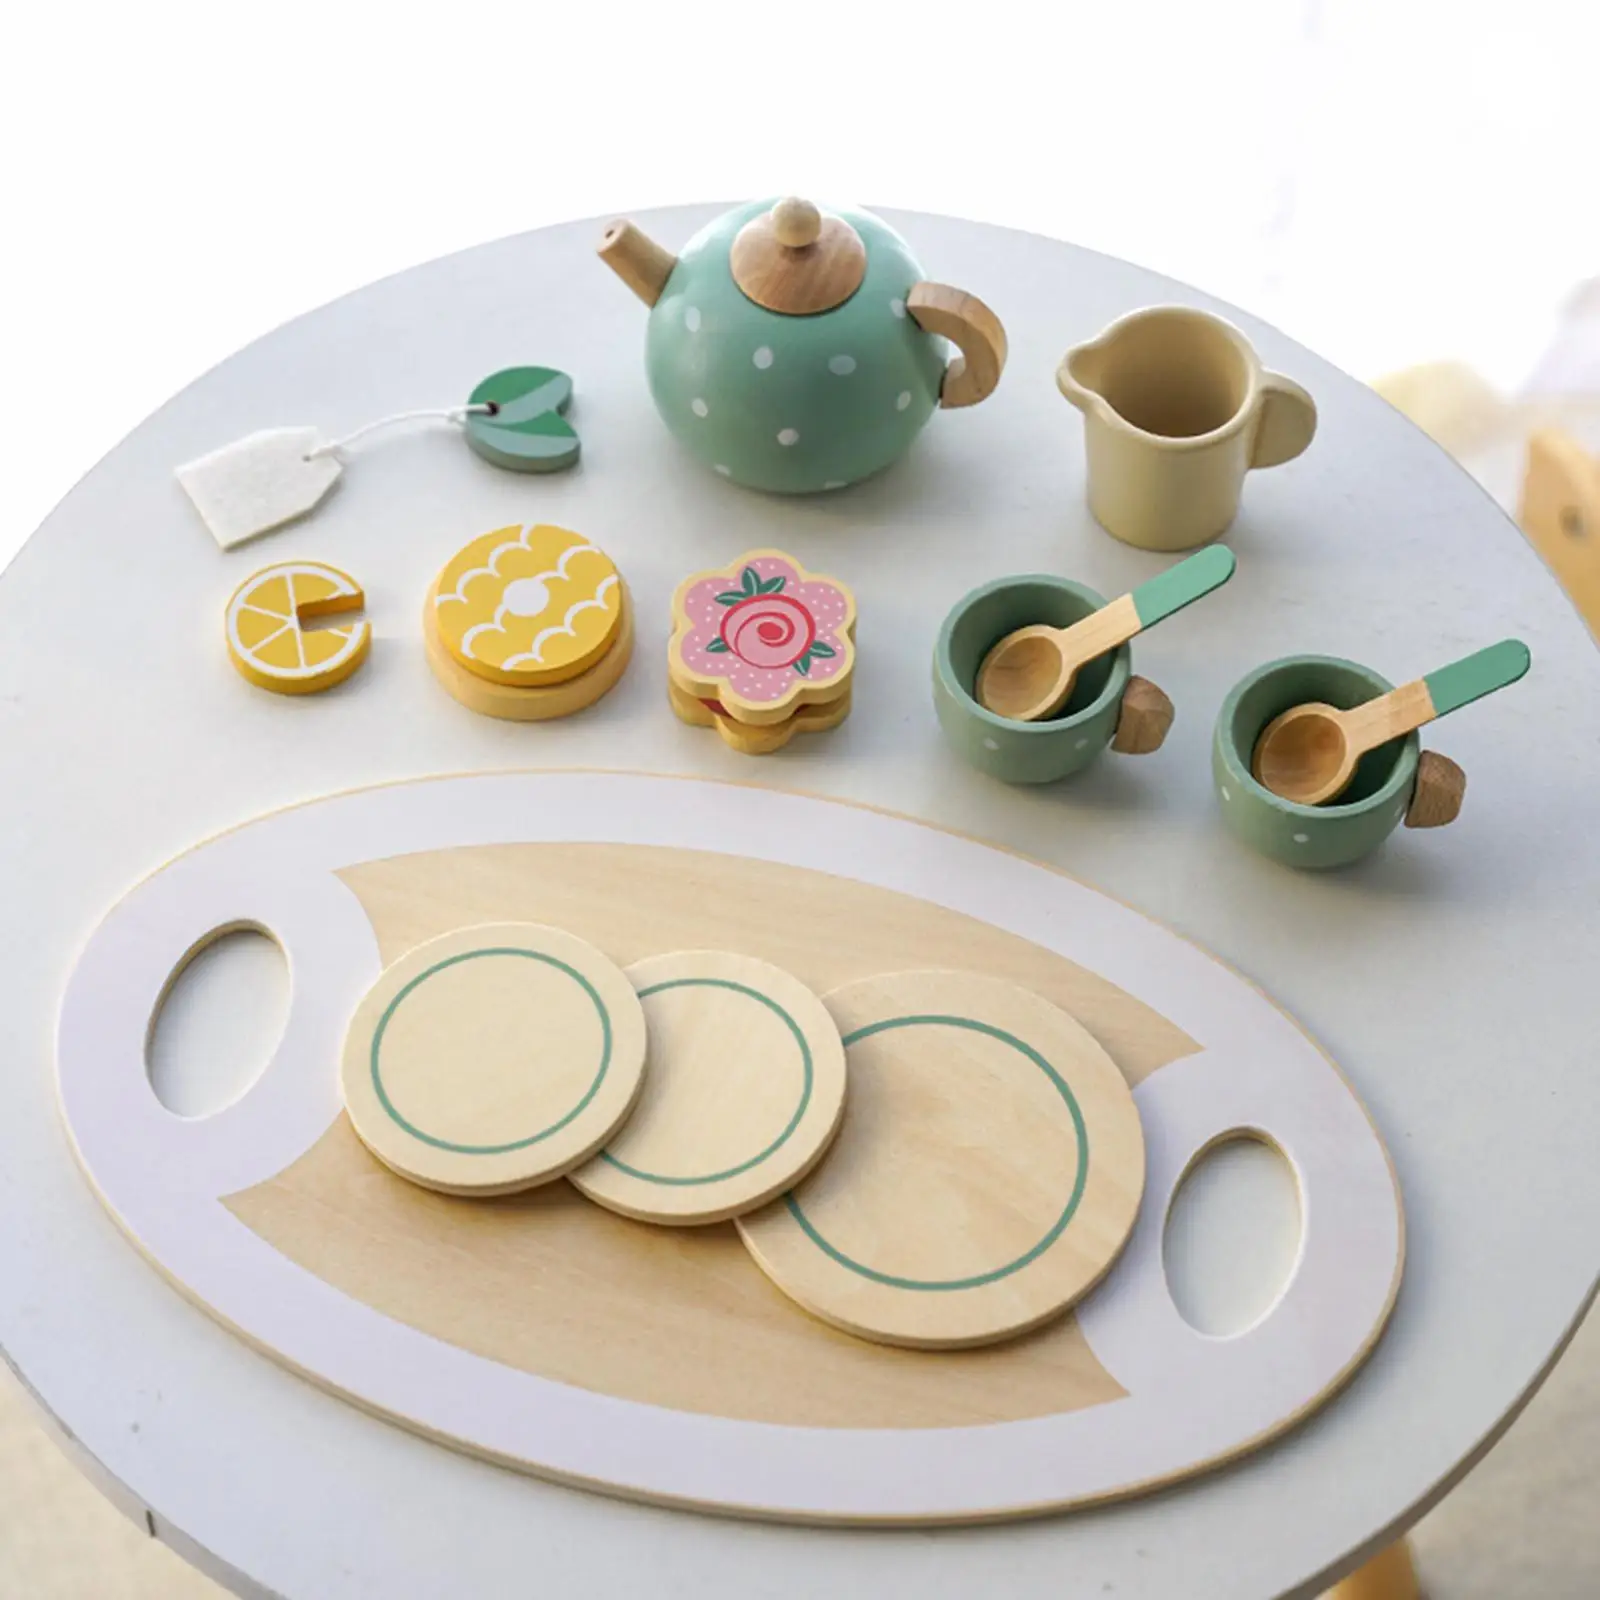 15Pcs Pretend Tea Party Mini Kitchen Kitchen Tableware Set for Preschool Kids Children Birthday Gift Ages 3 4 5 Years Old